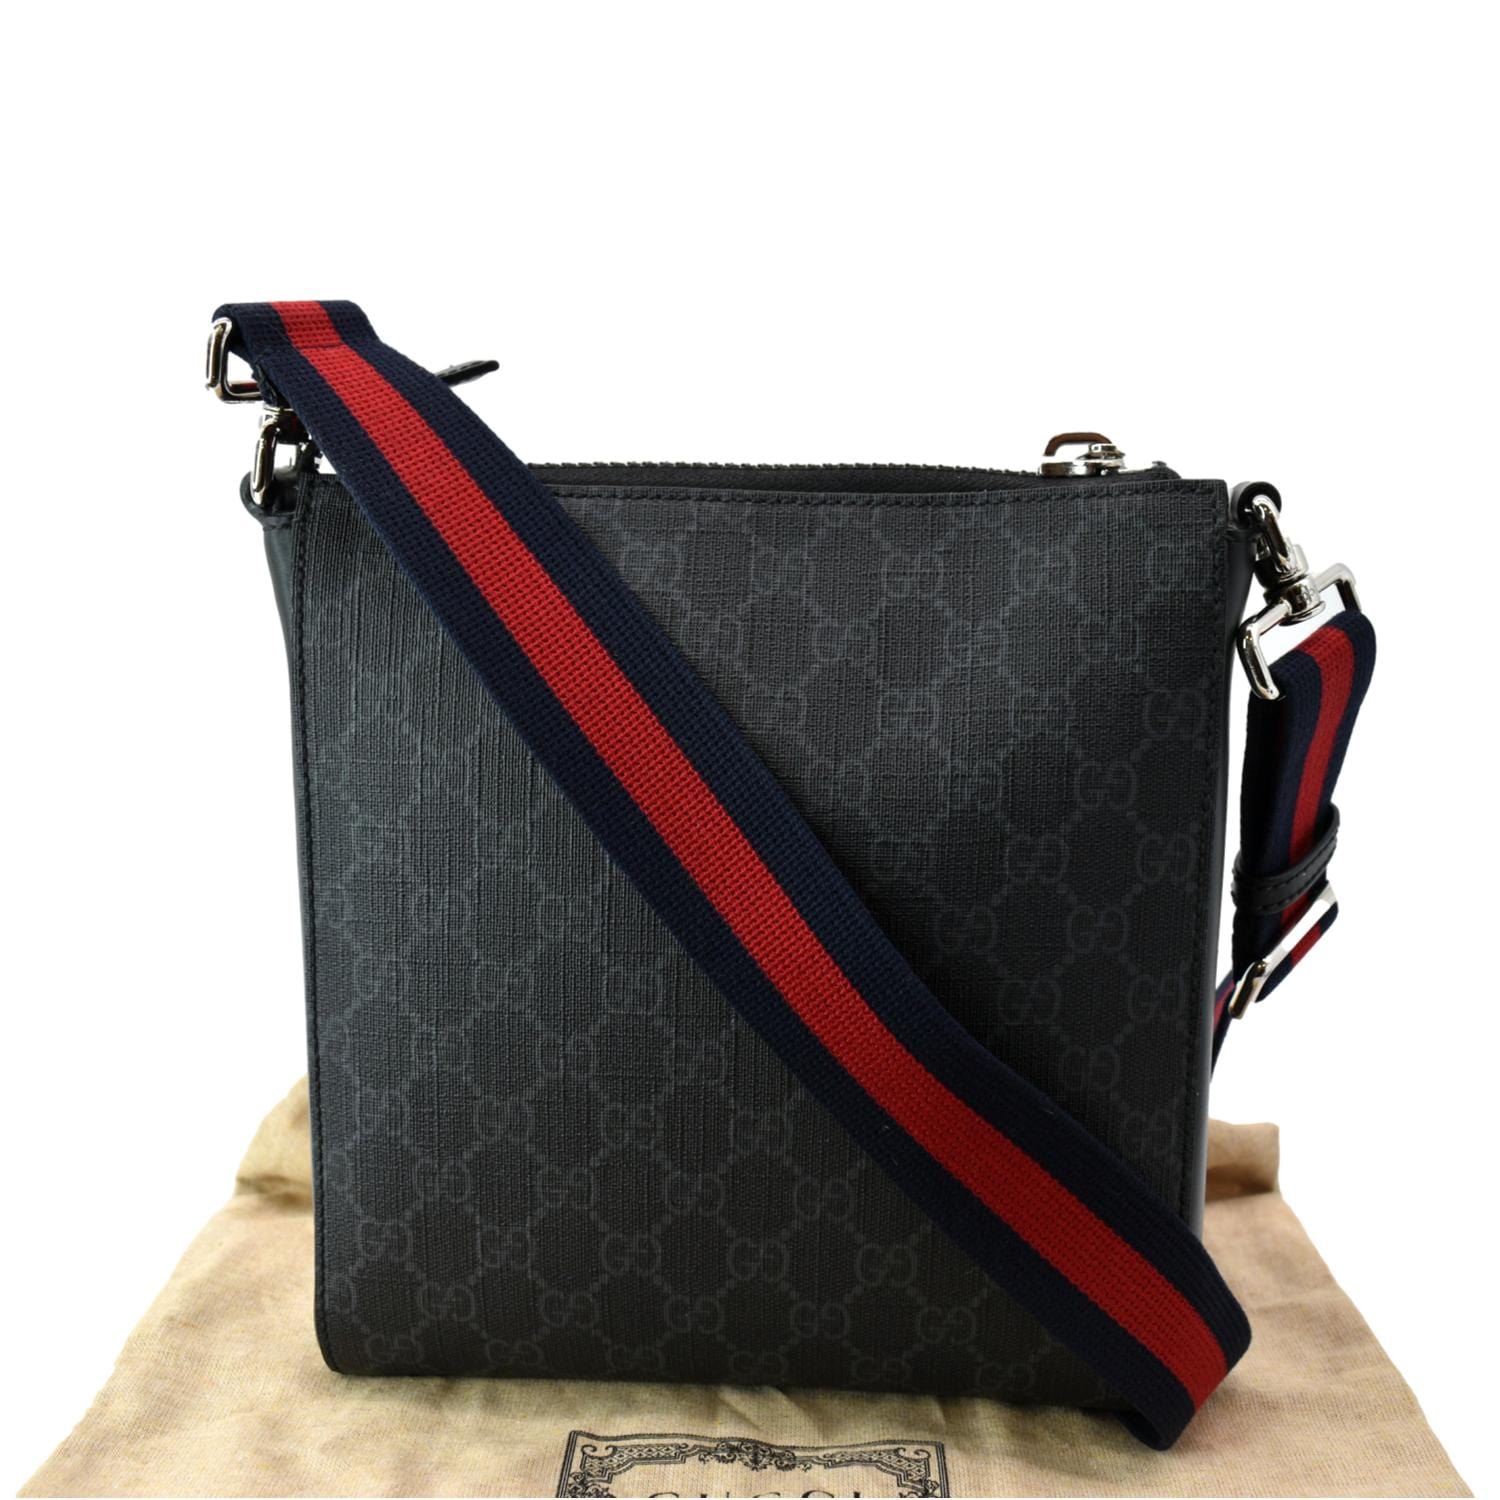 GG Supreme Messenger Bag in Black - Gucci